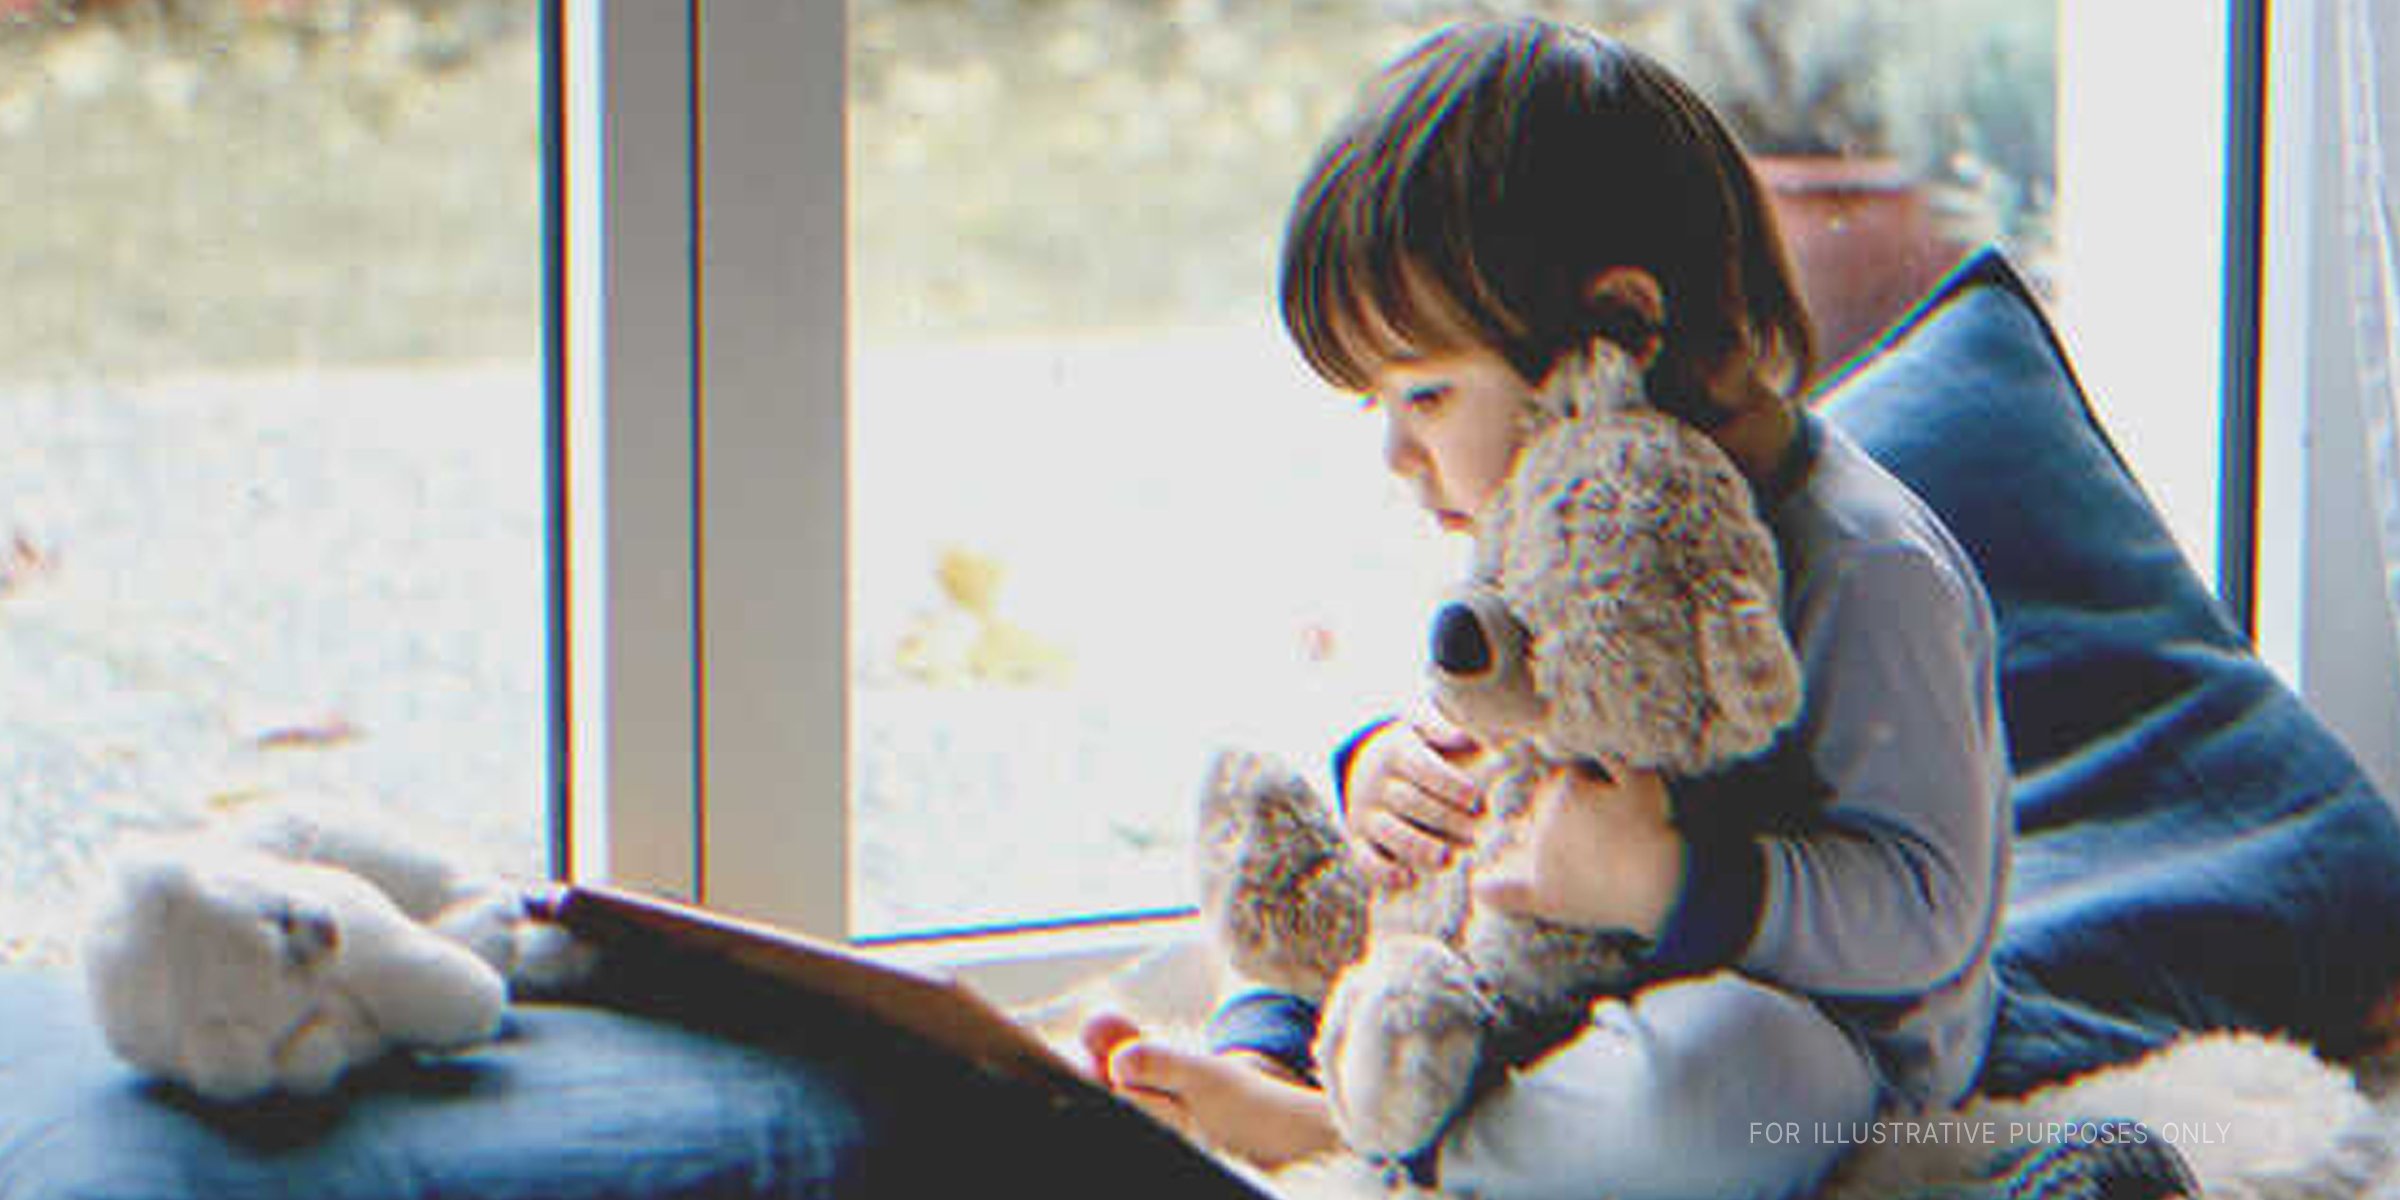 A young boy. | Source: Shutterstock